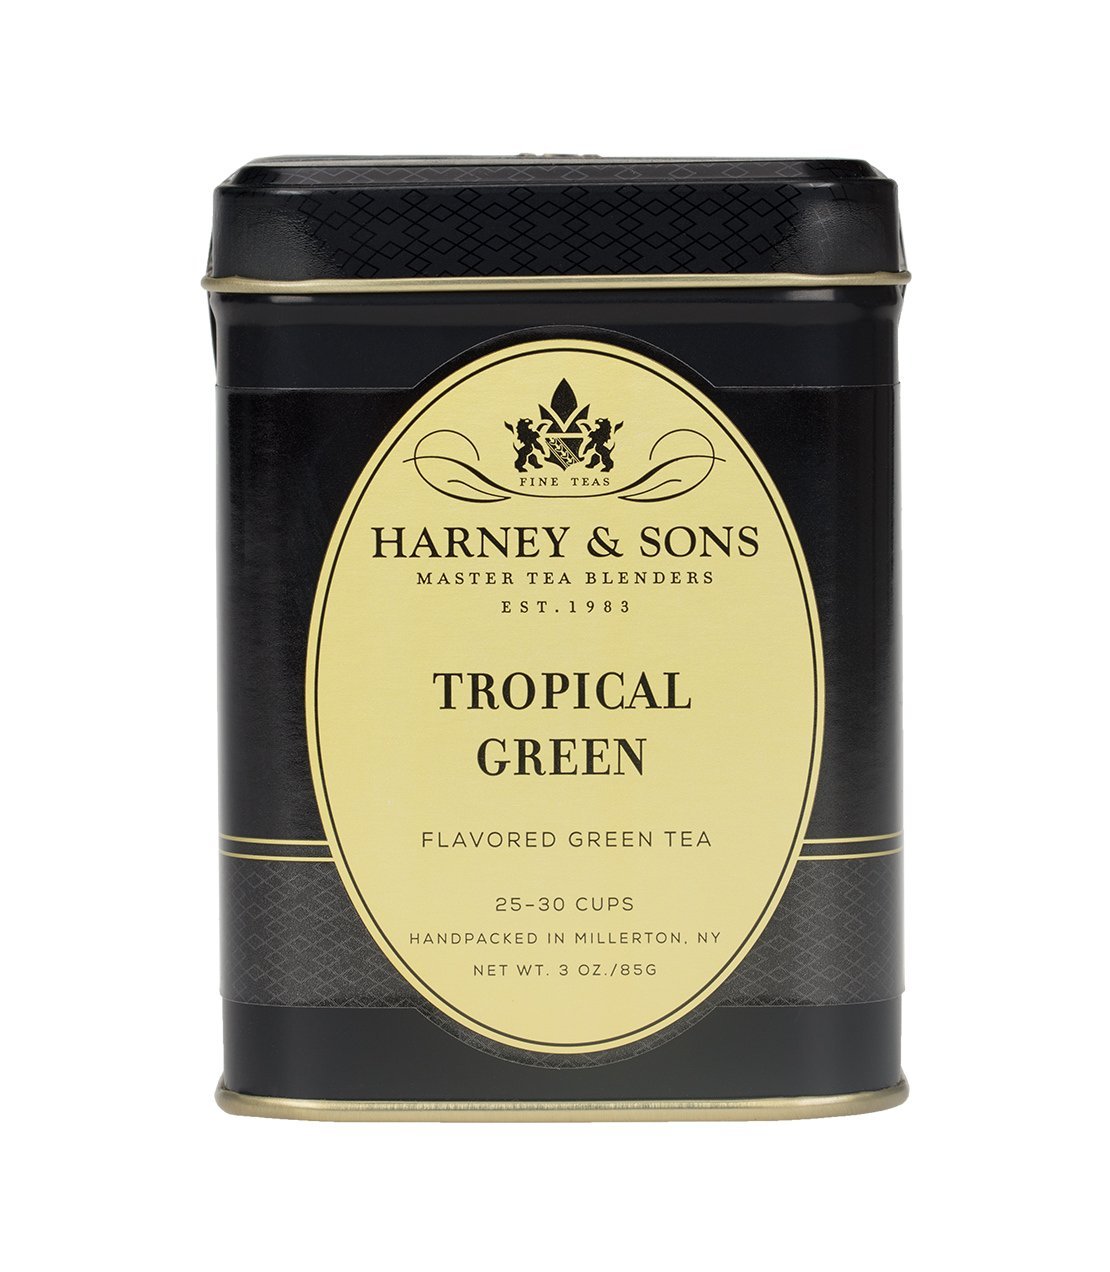 Tropical Green - Harney & Sons Teas, European Distribution Center